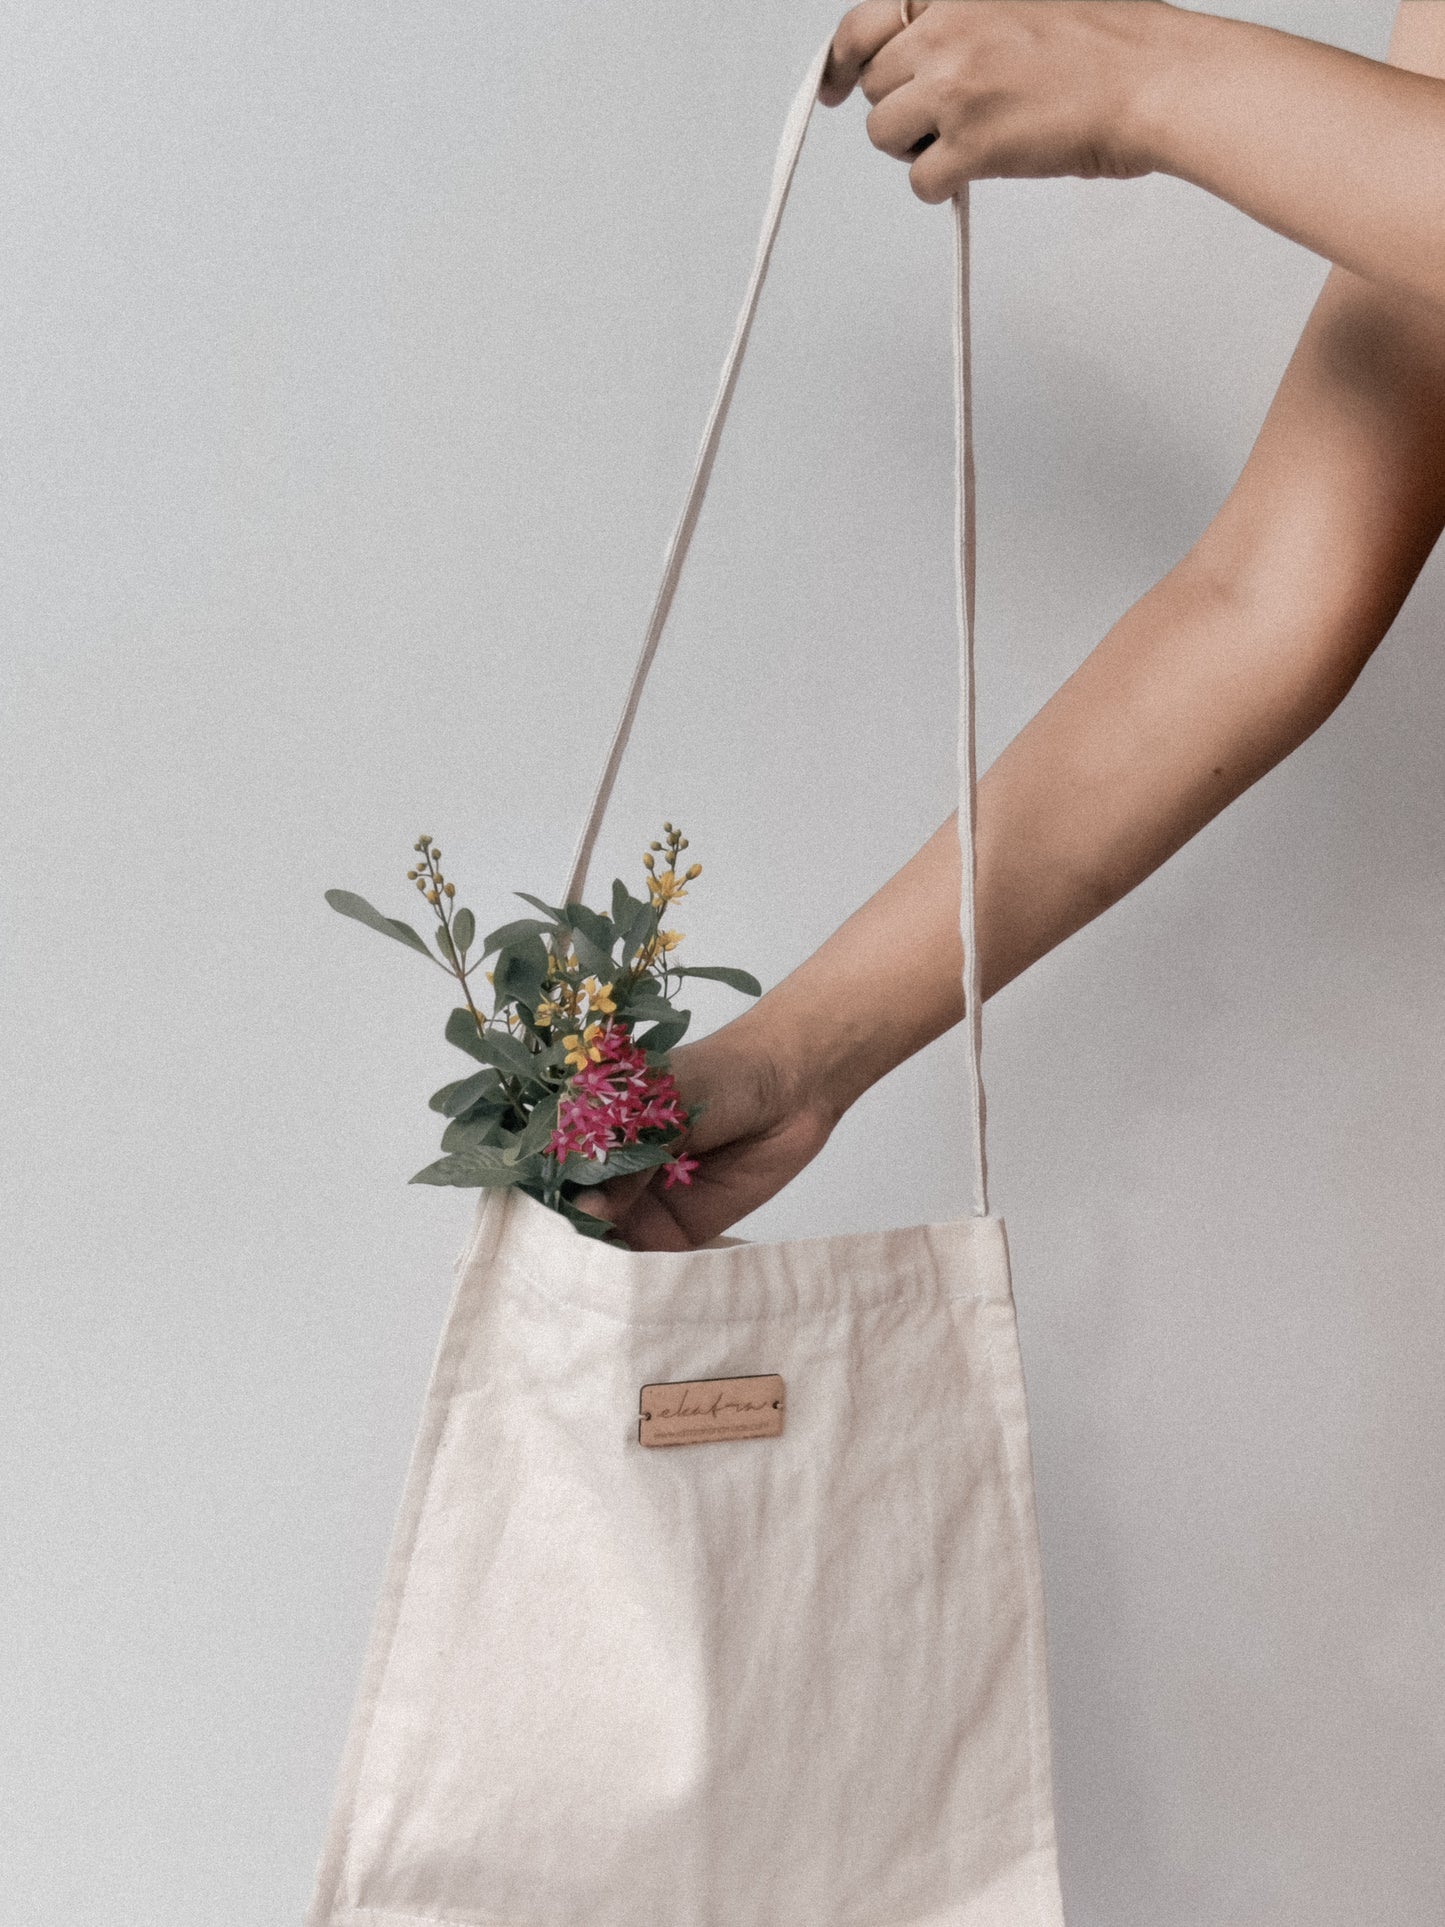 Boxy sling - Woven cotton